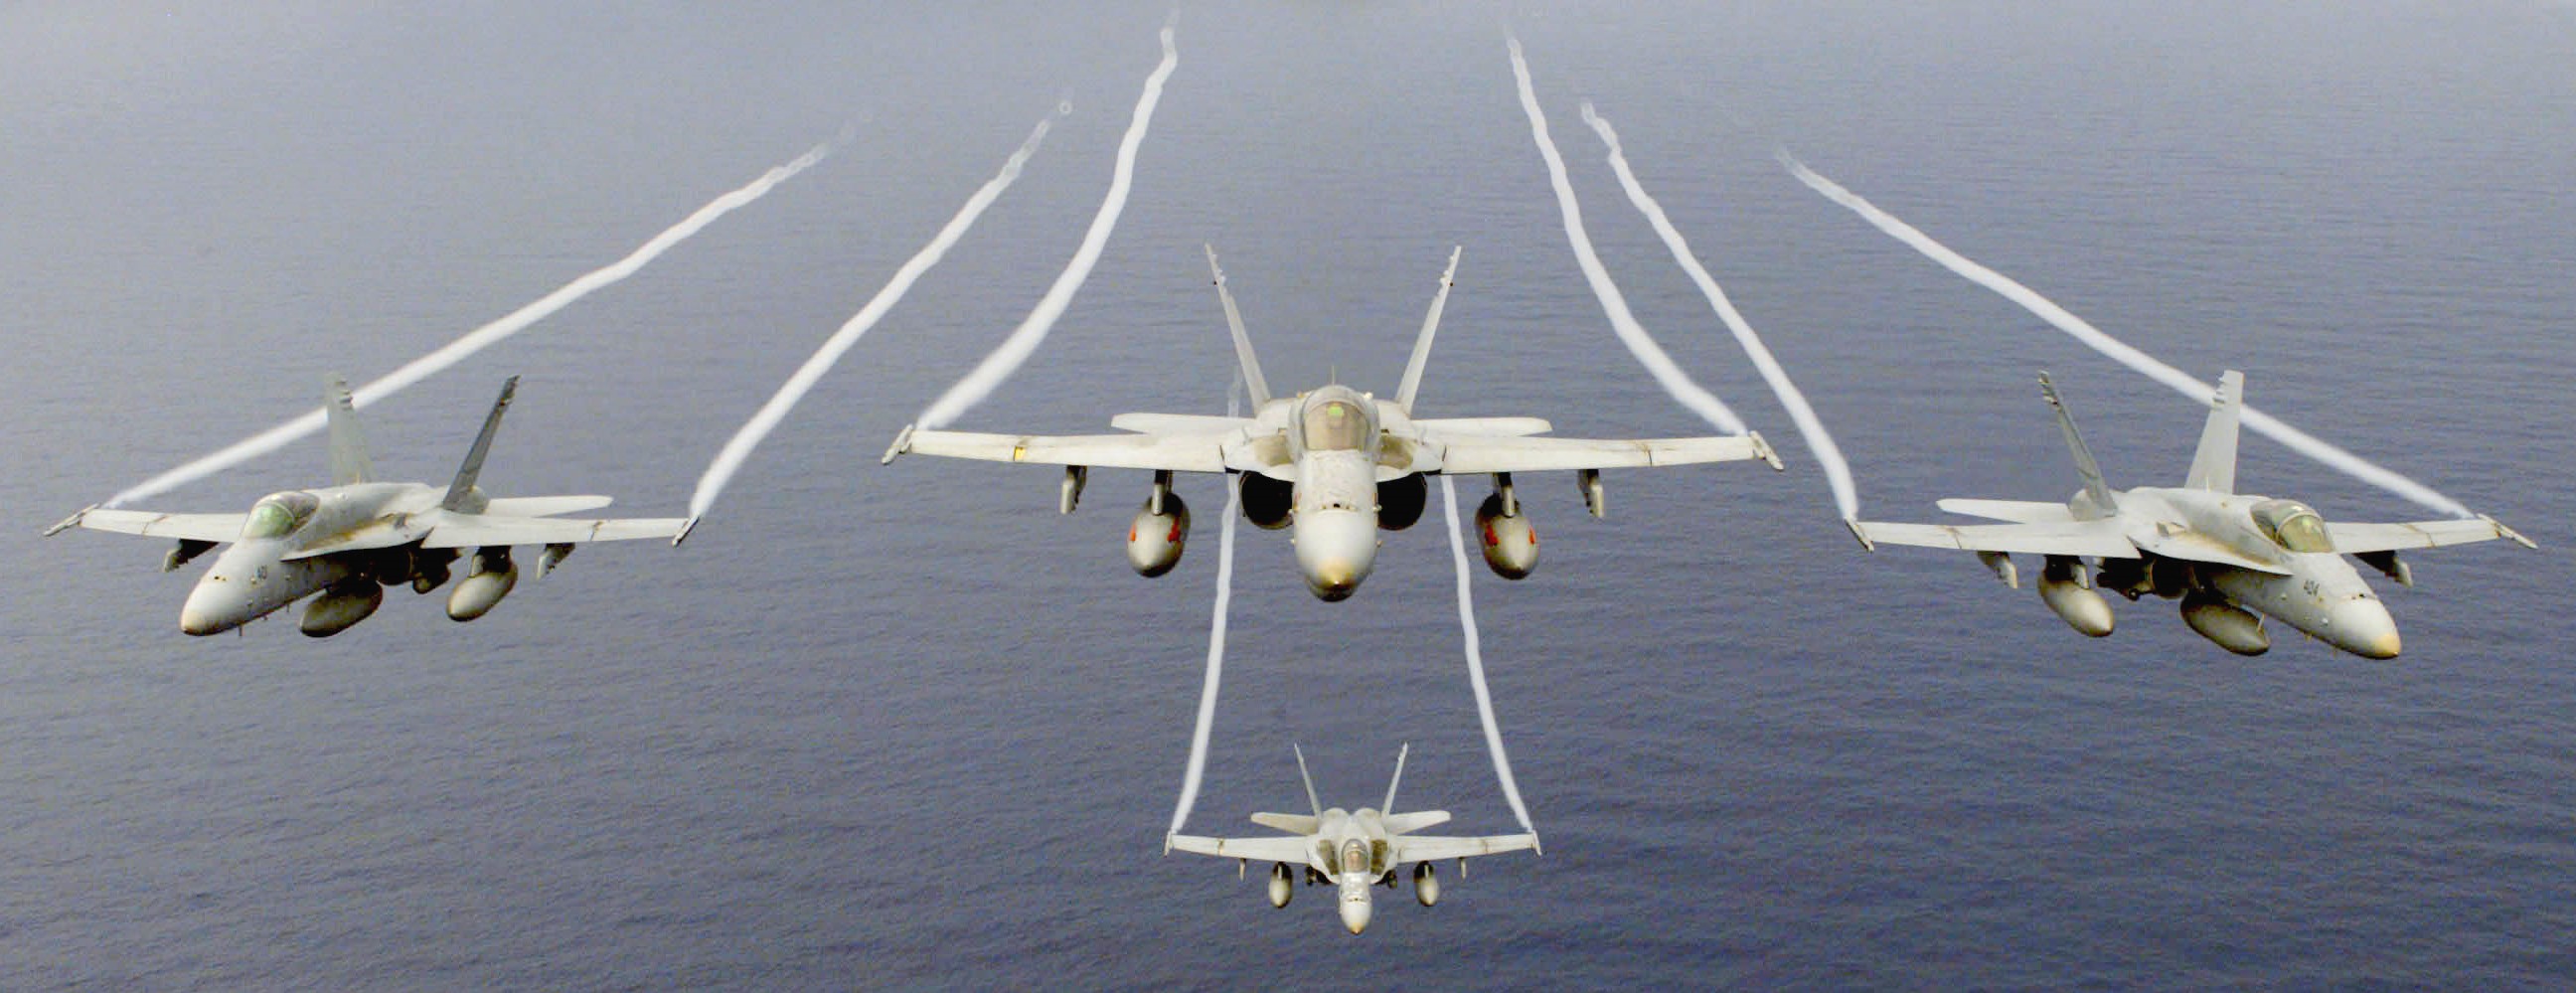 vfa-94 mighty shrikes strike fighter squadron f/a-18c hornet cvw-11 uss nimitz cvn-68 us navy 52p